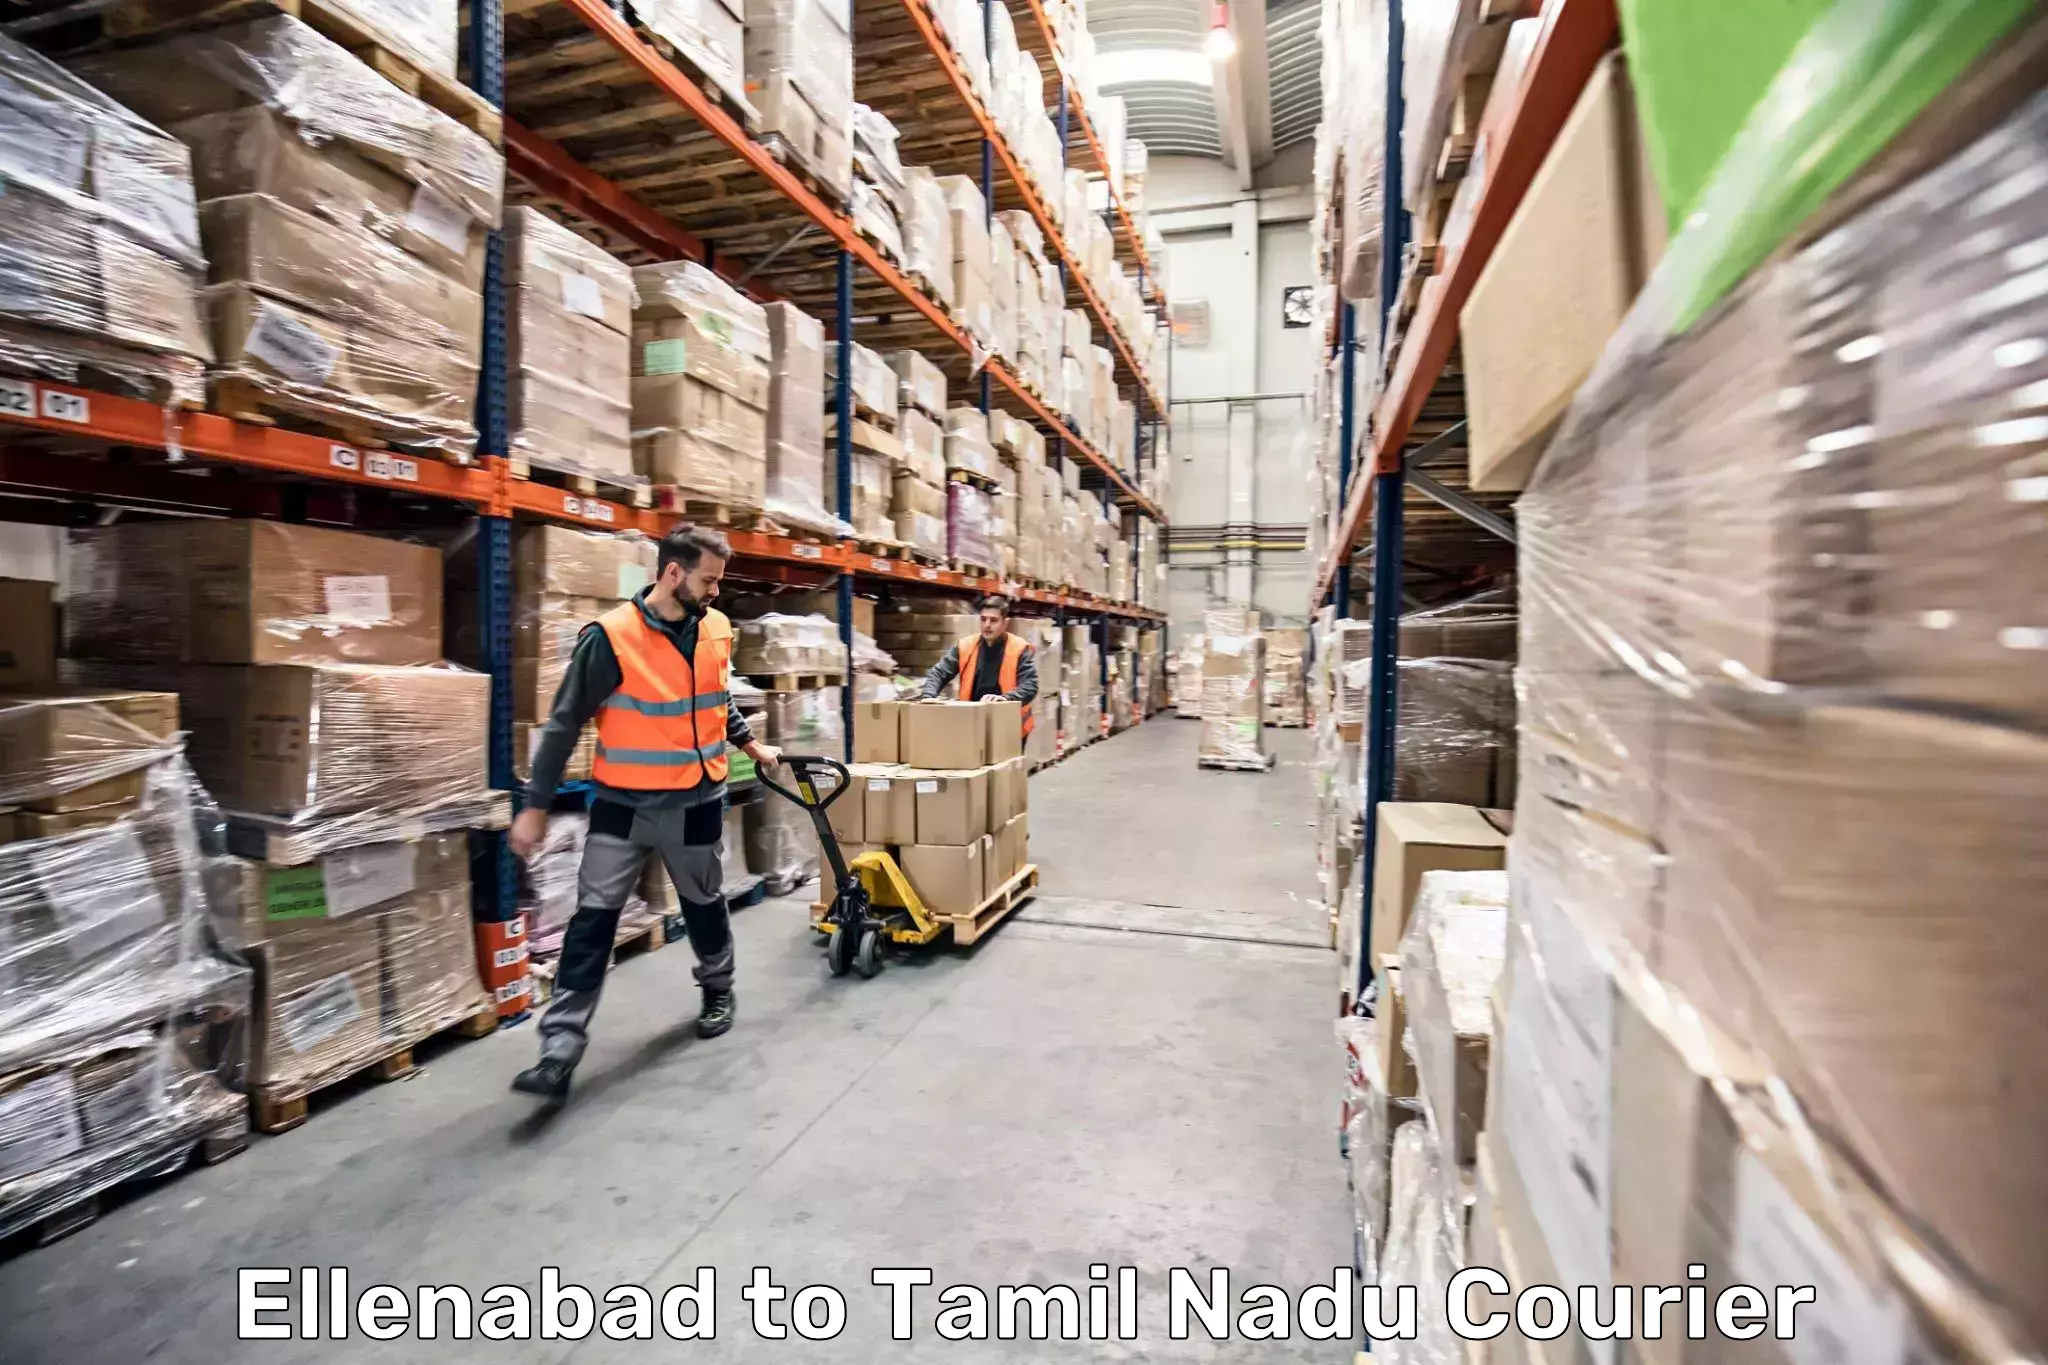 Luggage shipment tracking Ellenabad to Tamil Nadu